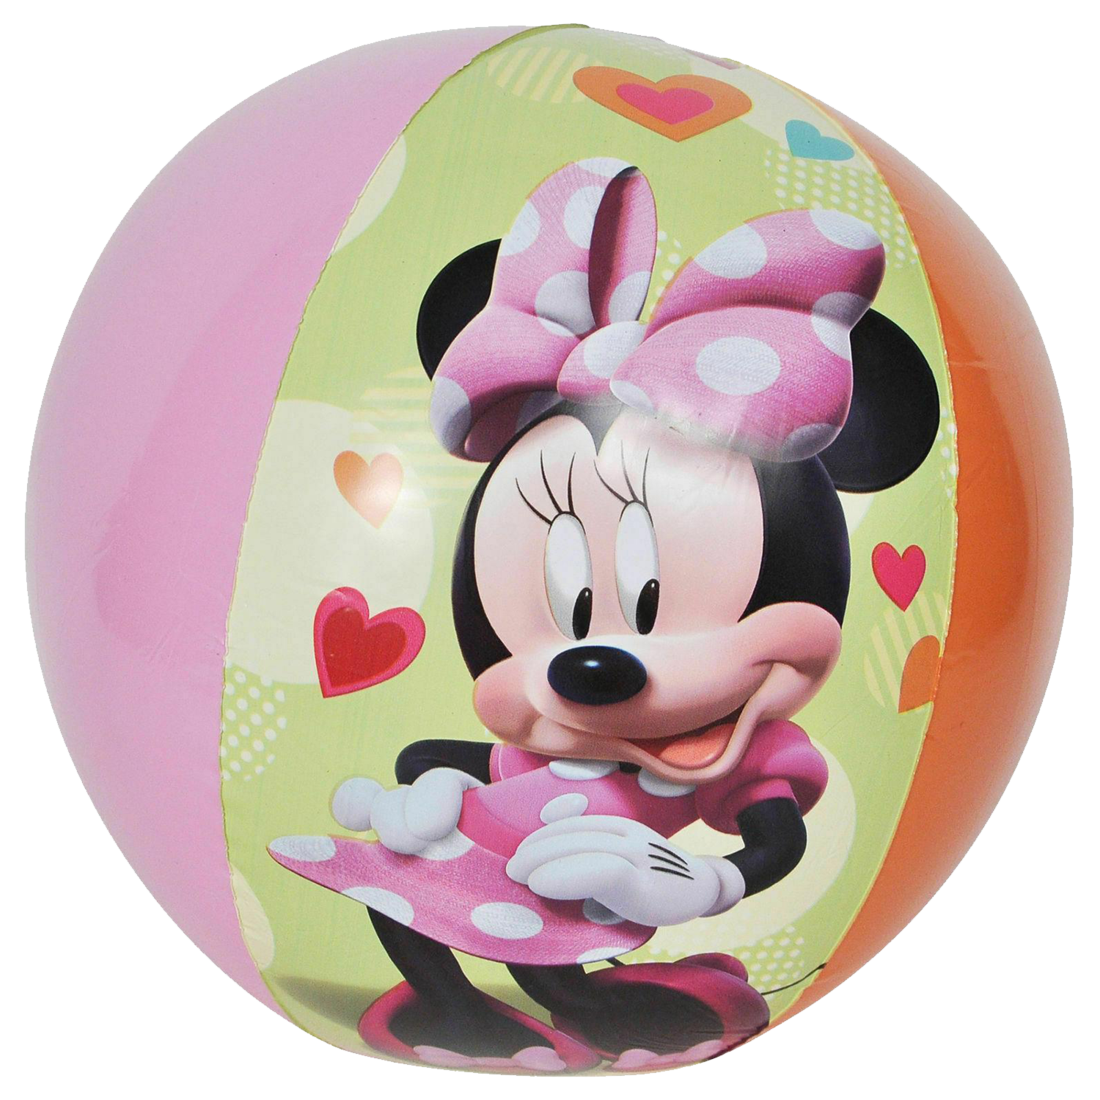 Disney Minnie Mouse Bowtique Inflatable Beach Ball